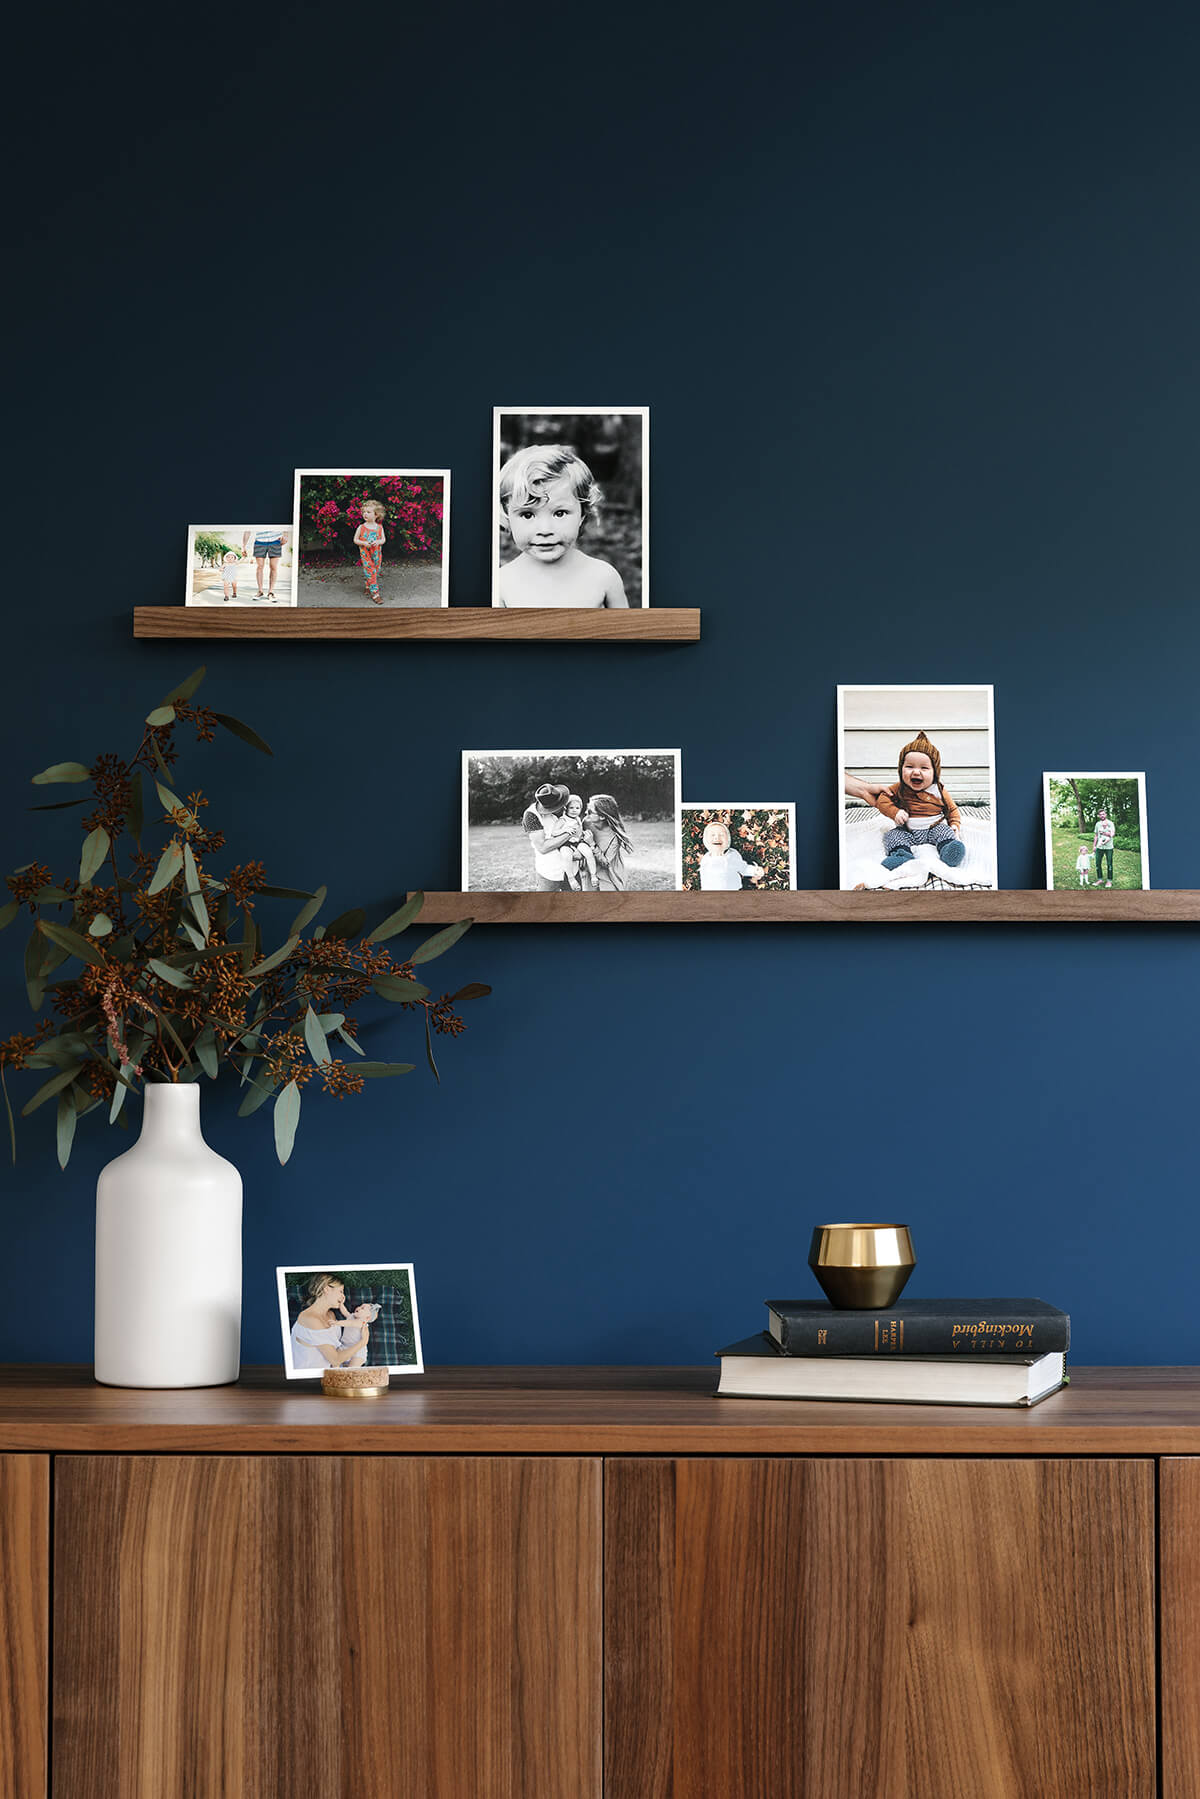 Prints arranged on a wooden photo ledge